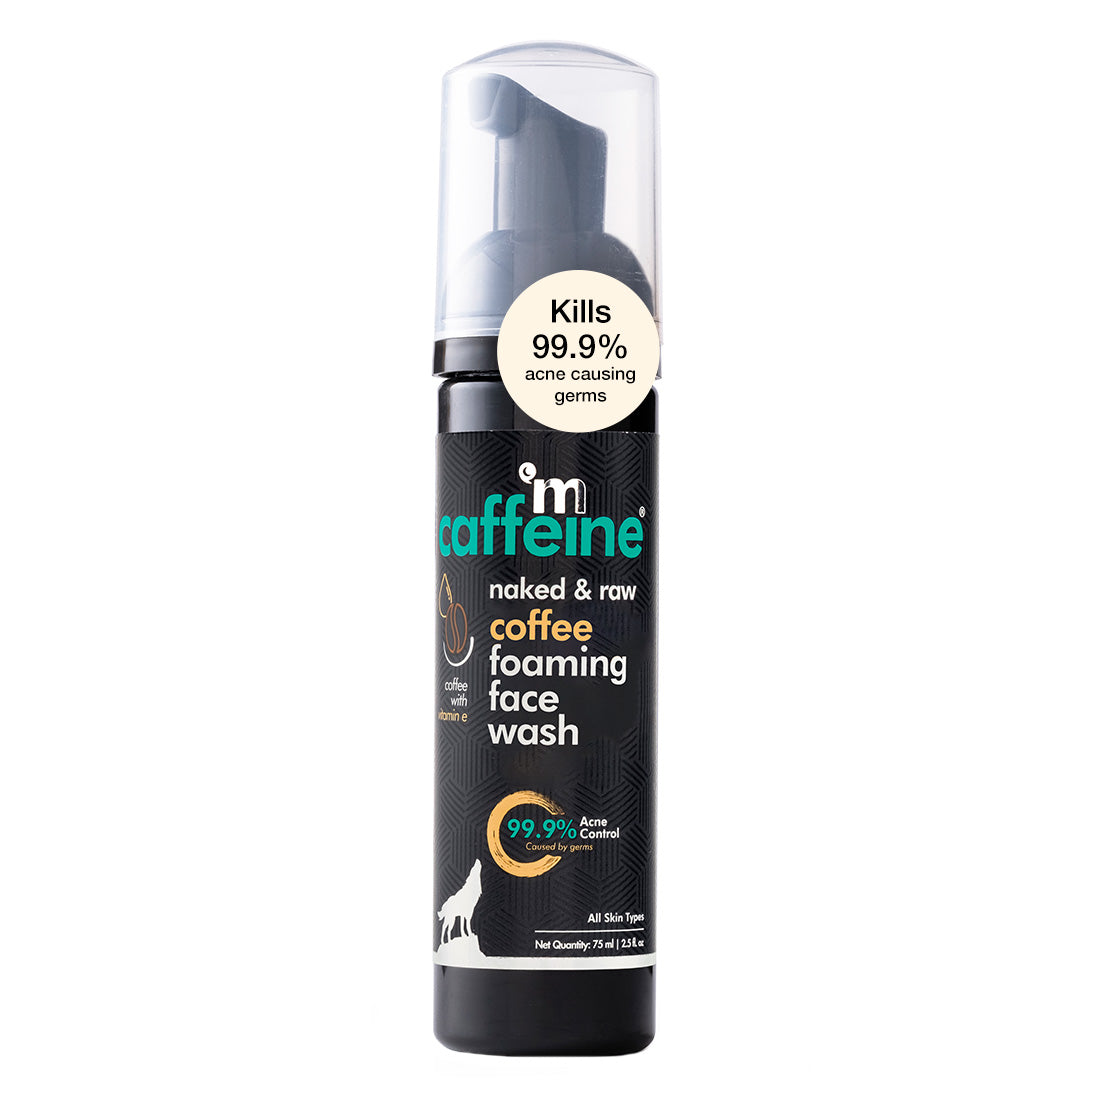 mCaffeine Anti Acne Coffee Foaming Face Wash - Oil & Pimple Control Cleanser with Cinnamon & Vitamin E